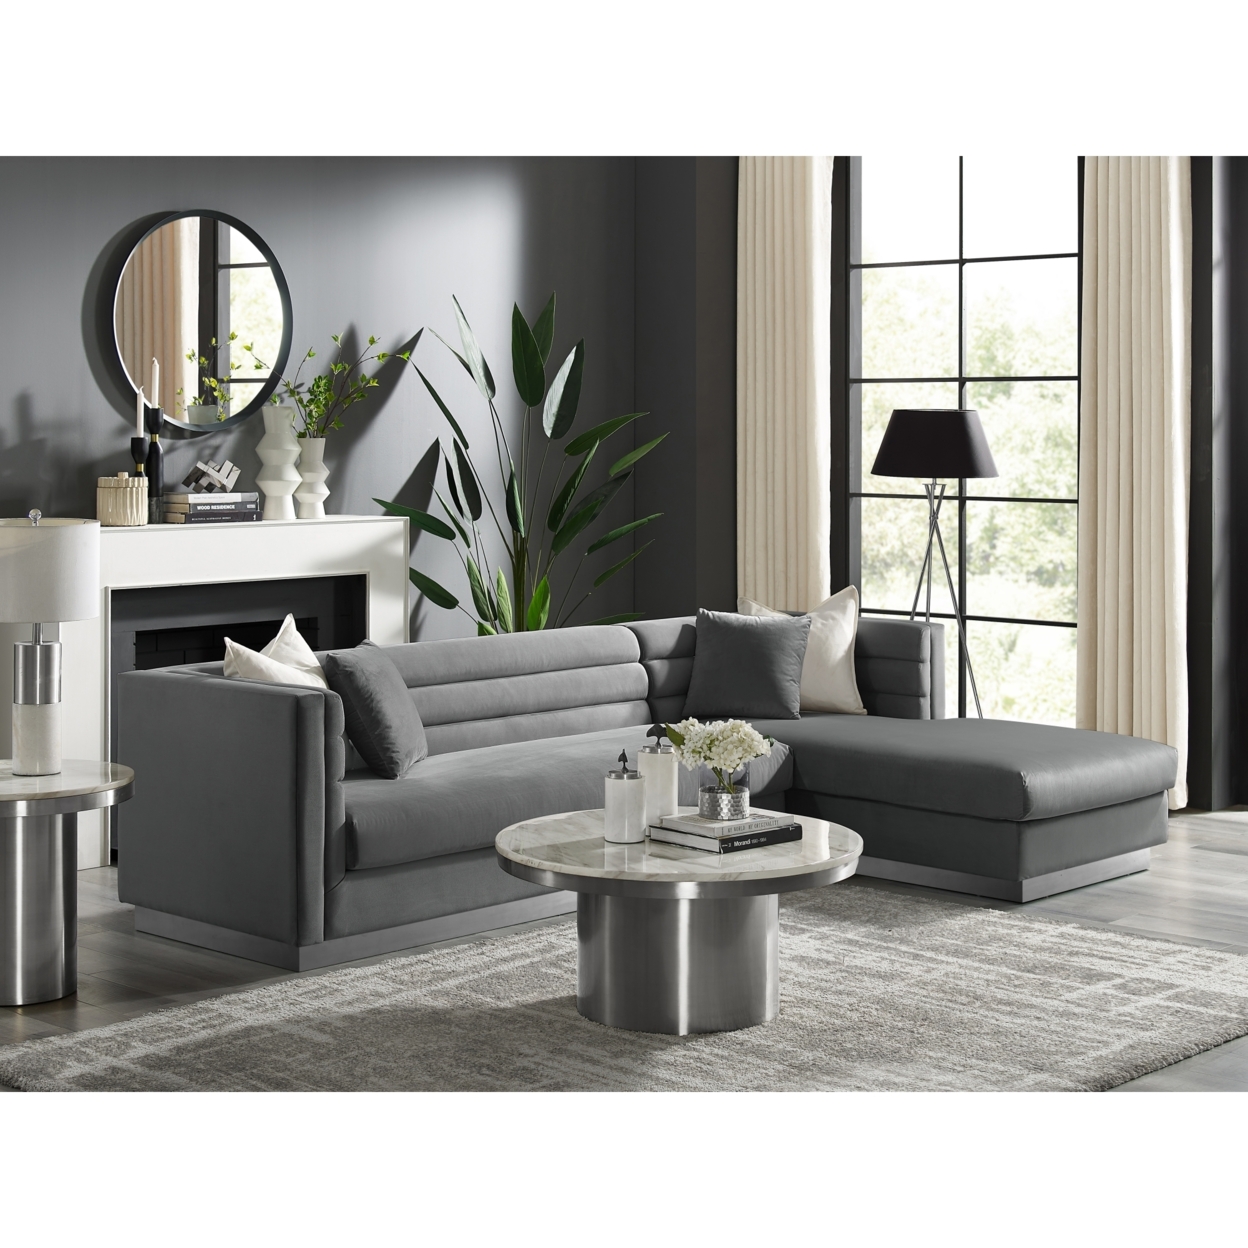 Aja Sofa-Upholstered-Modern-Metal Base, Square Arms-Horizontal Channel Tufting - Dark Grey